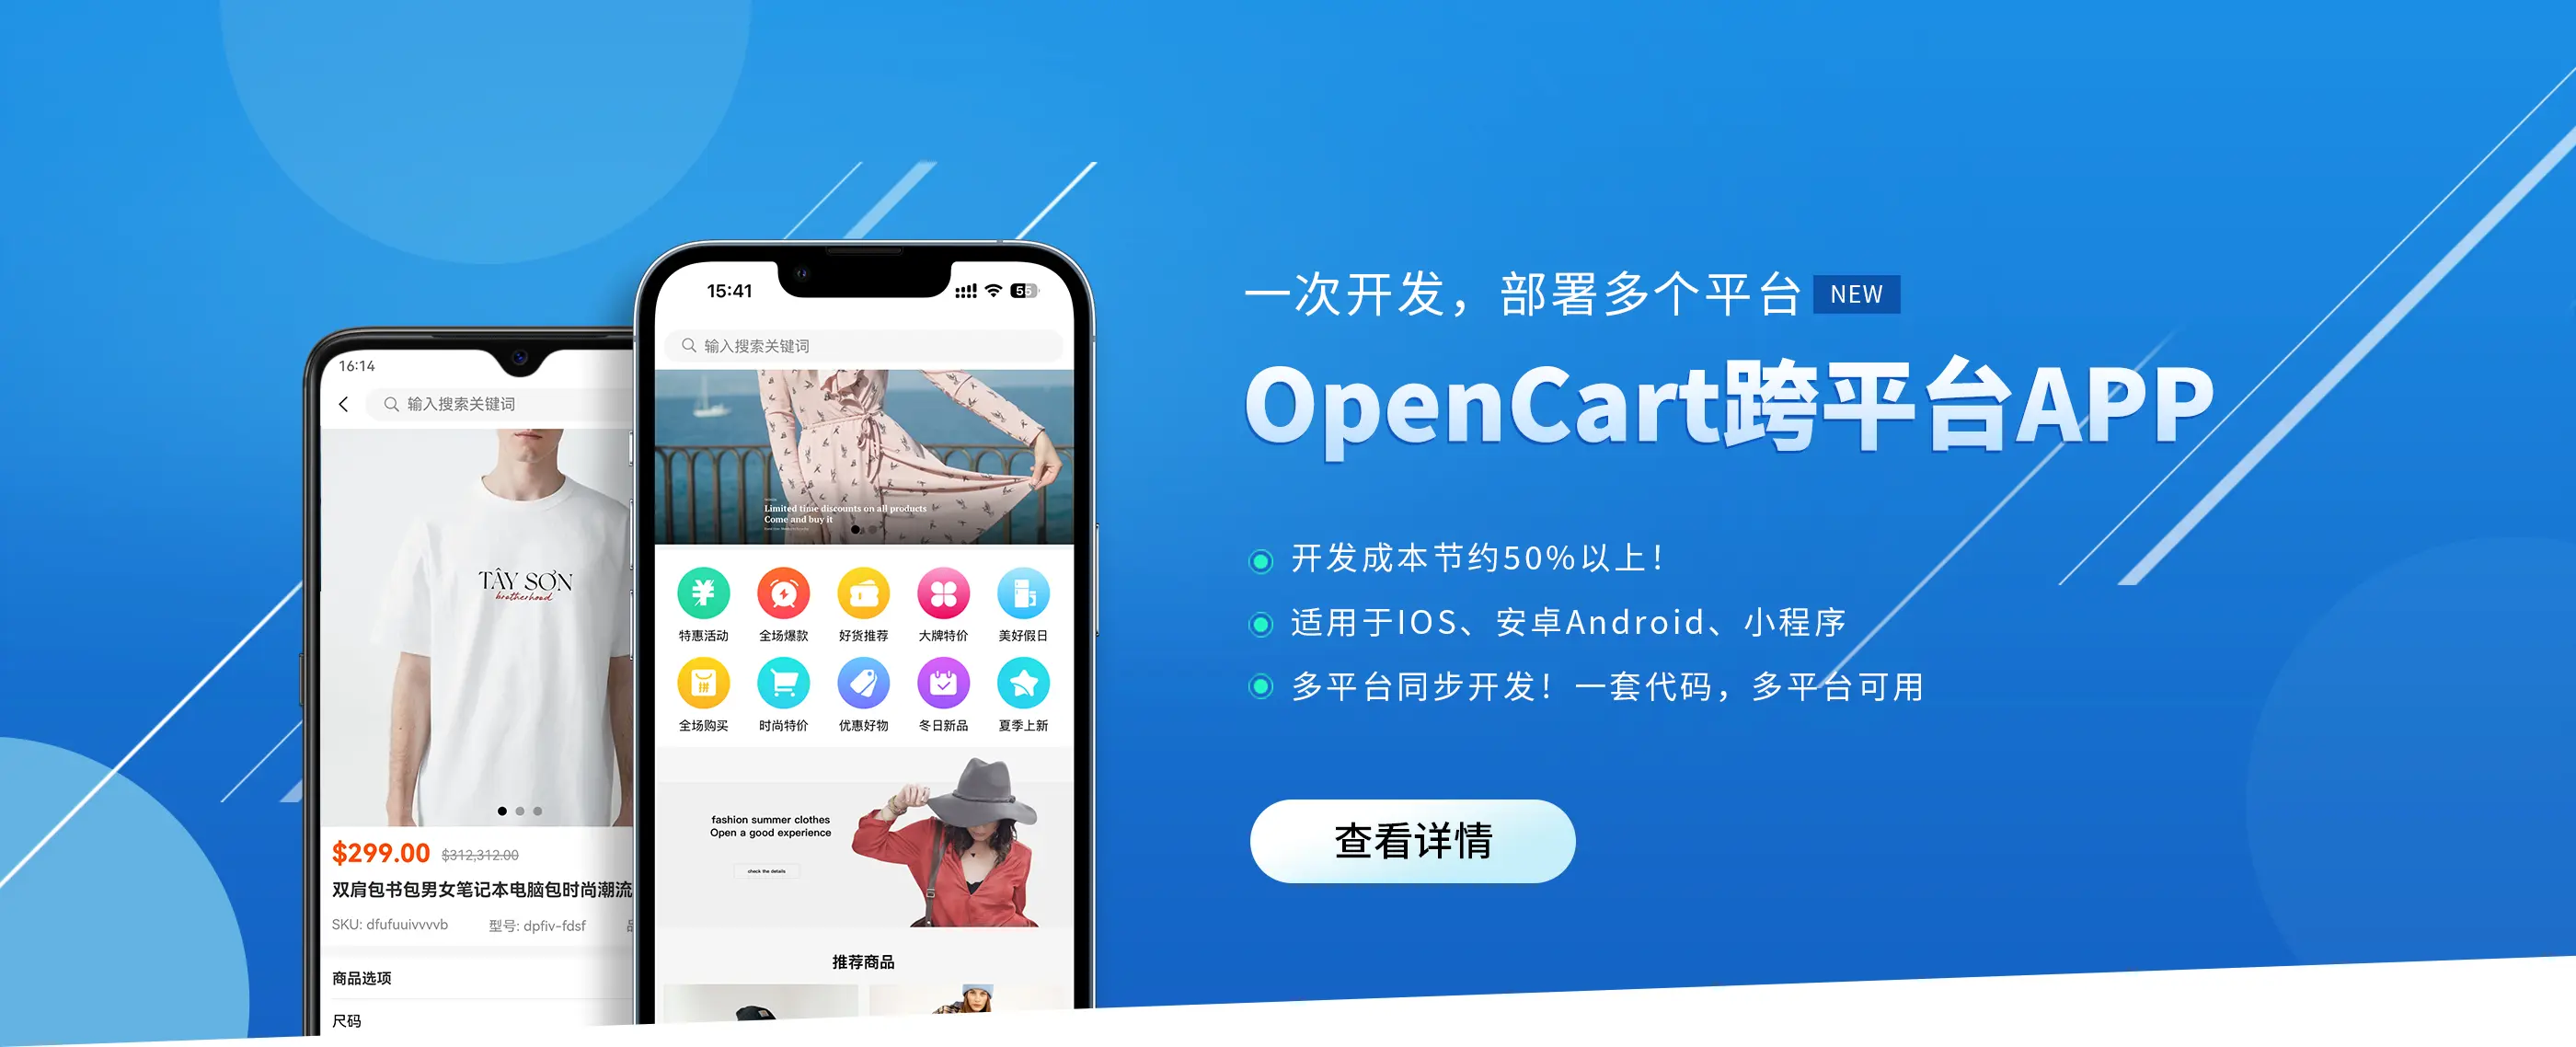 OCMobile - OpenCart 手机移动商城